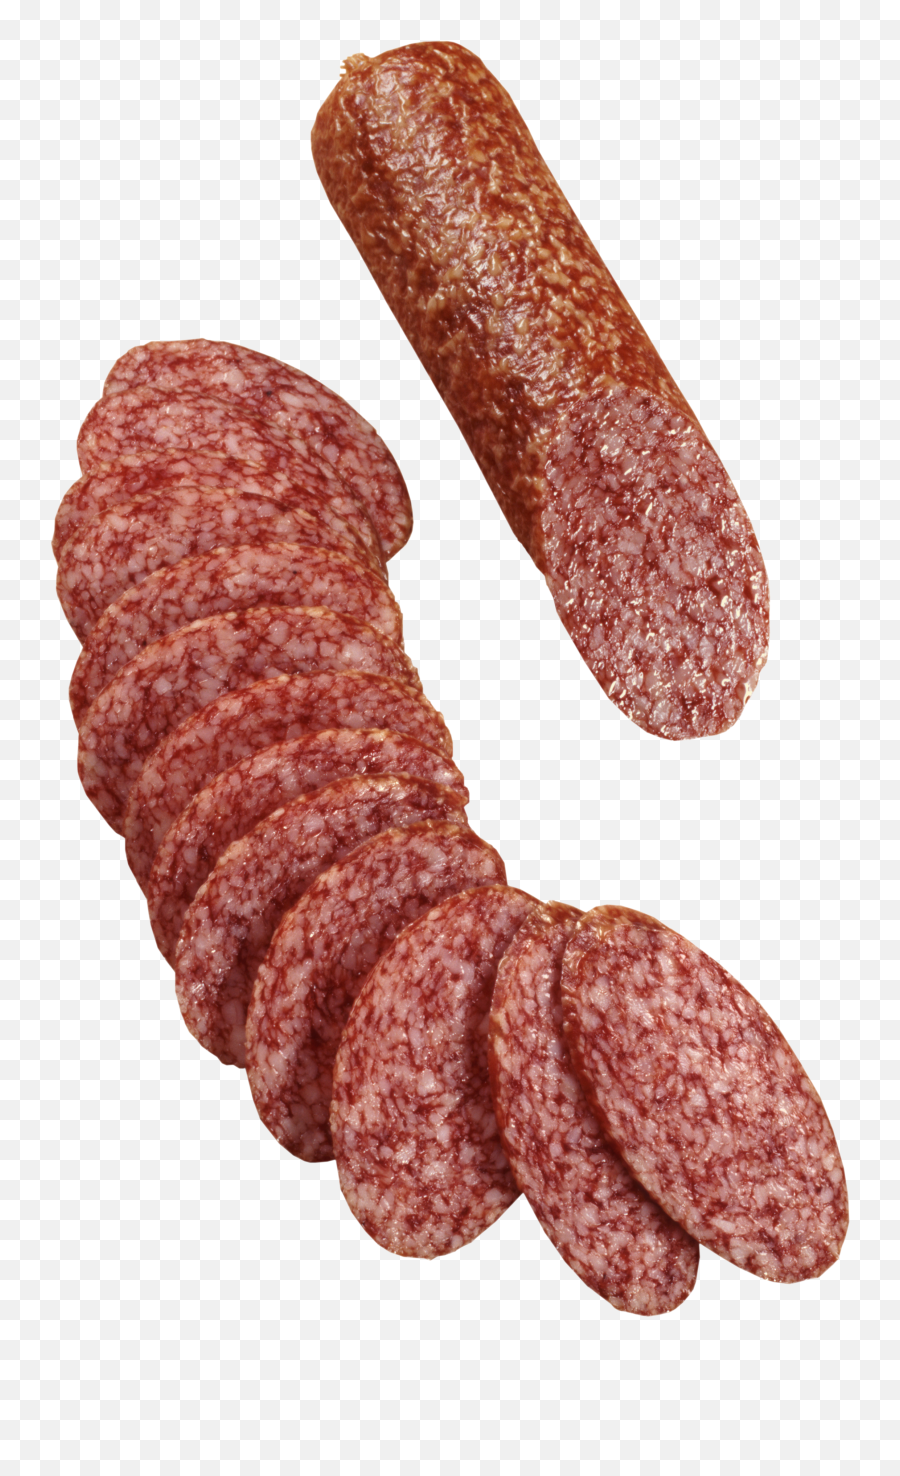 Download Sausage Png Image For Free Transparent